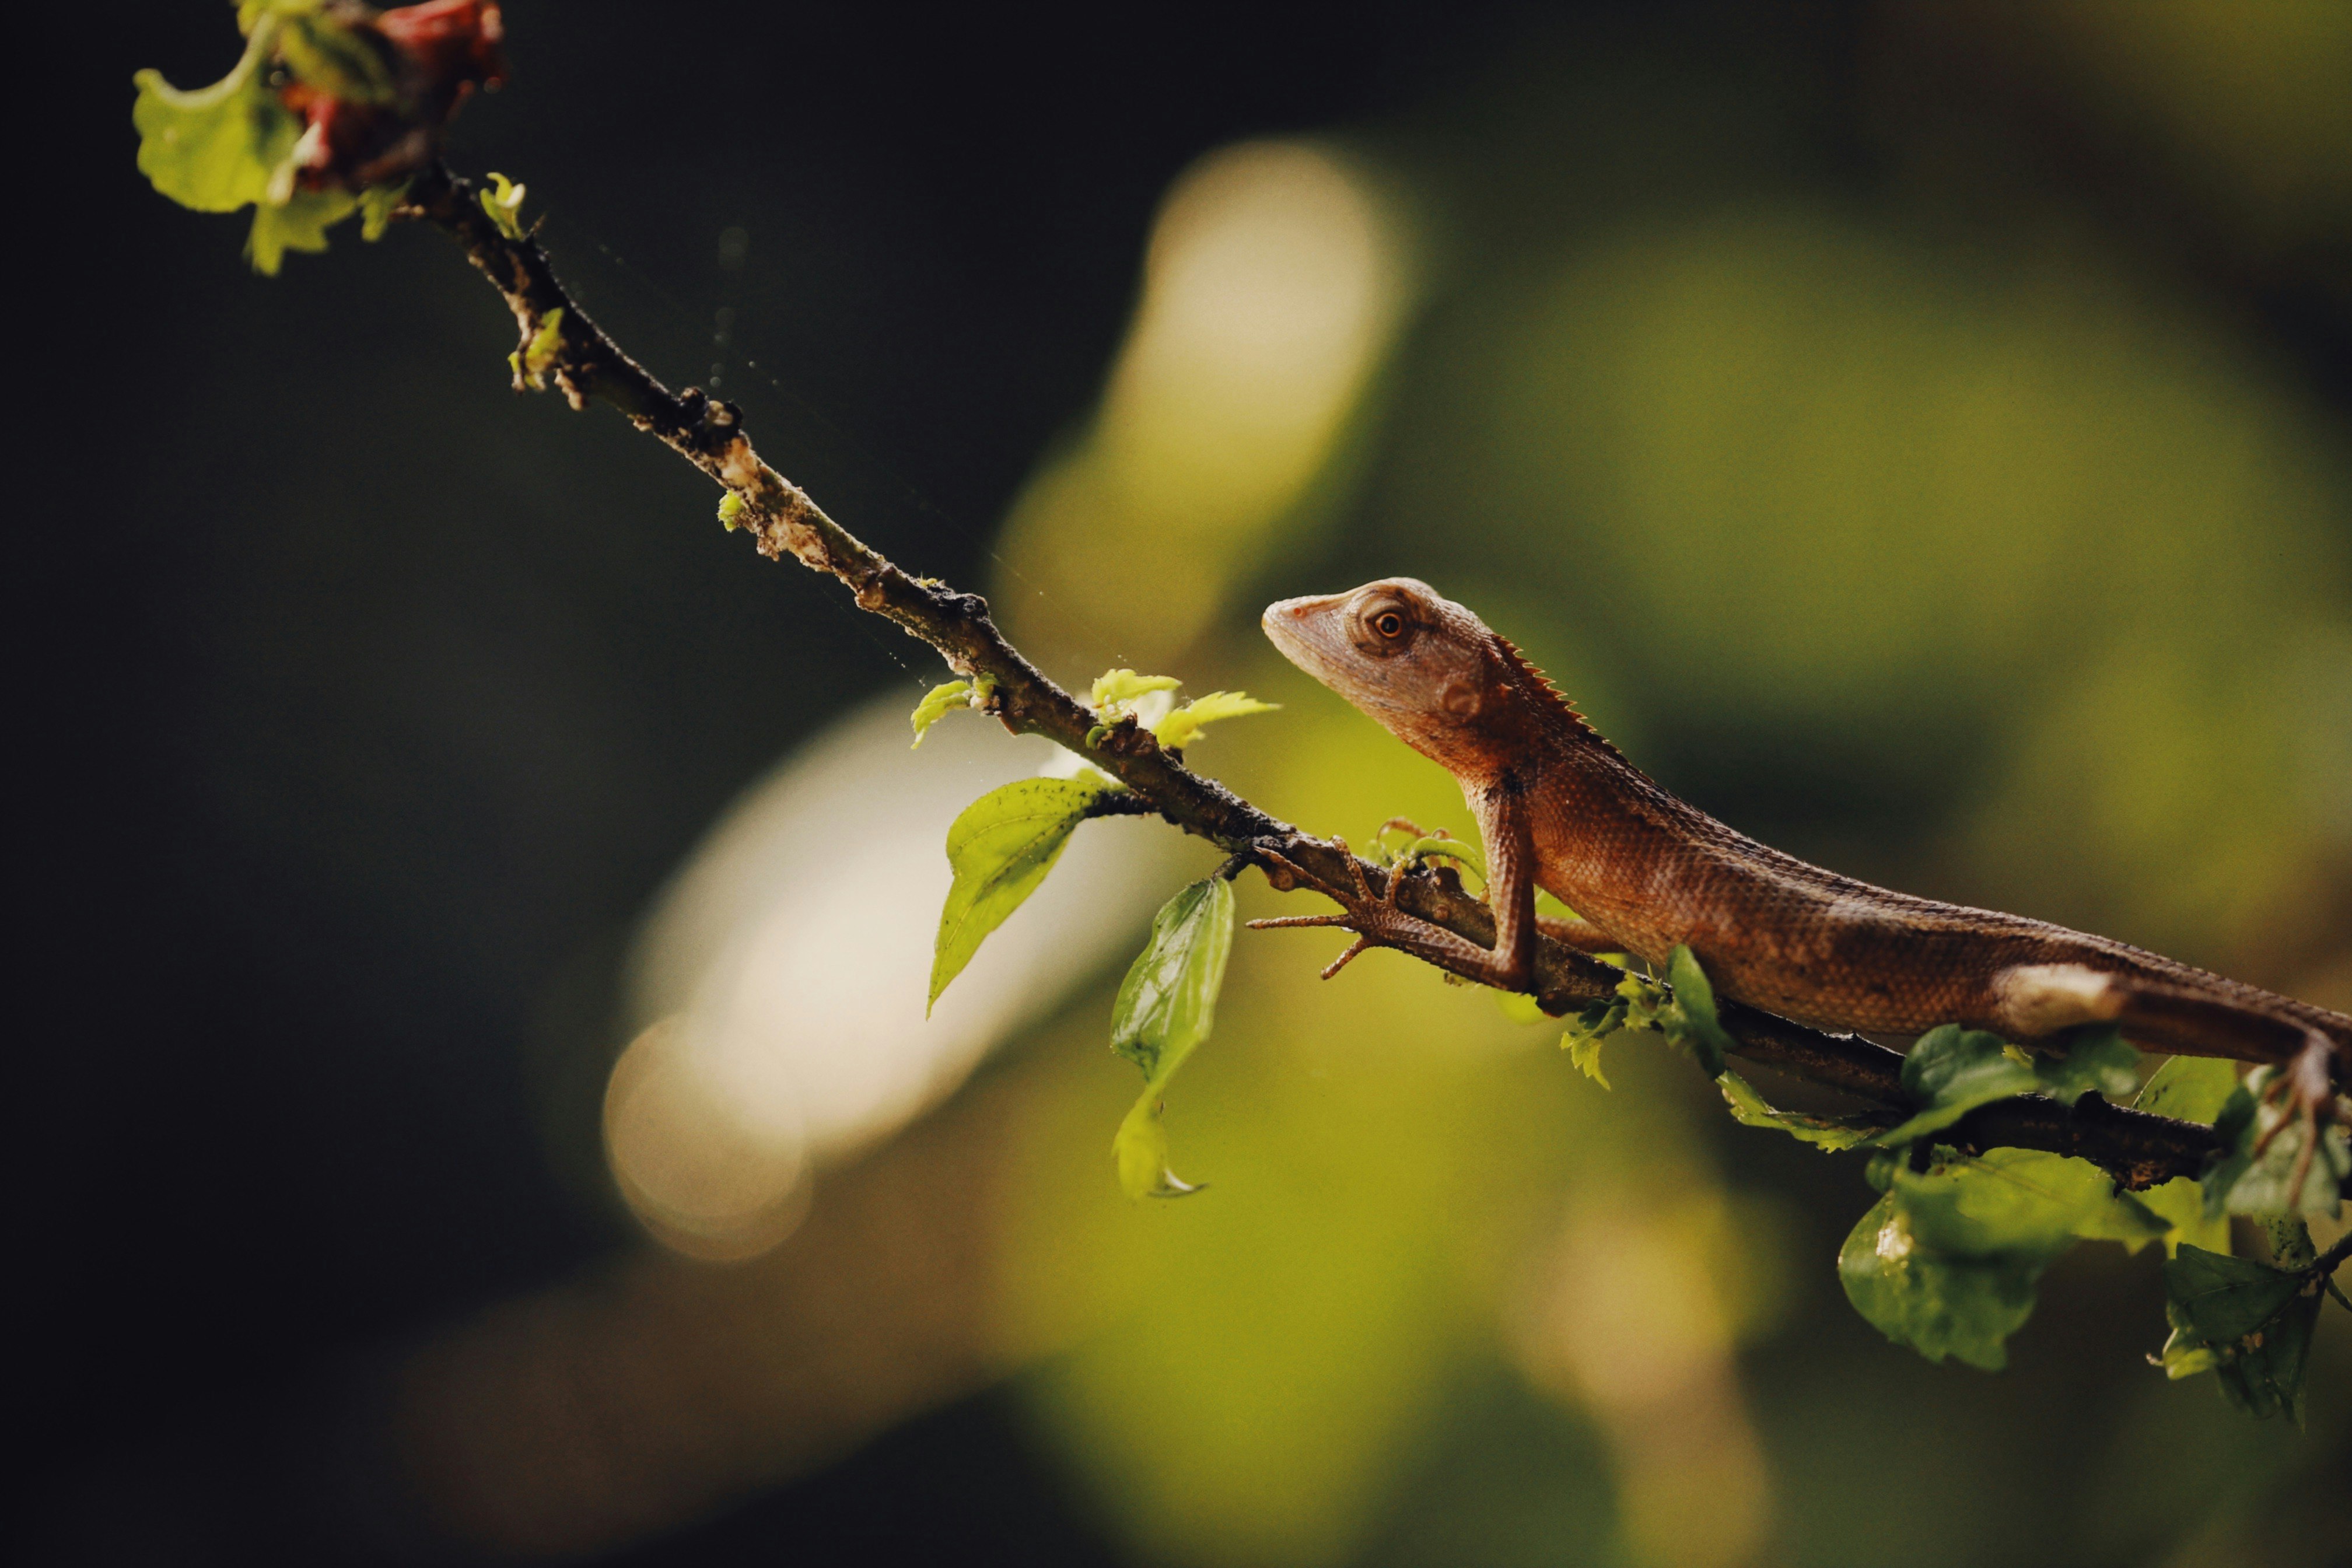 brown lizard on brown tree branch during daytime